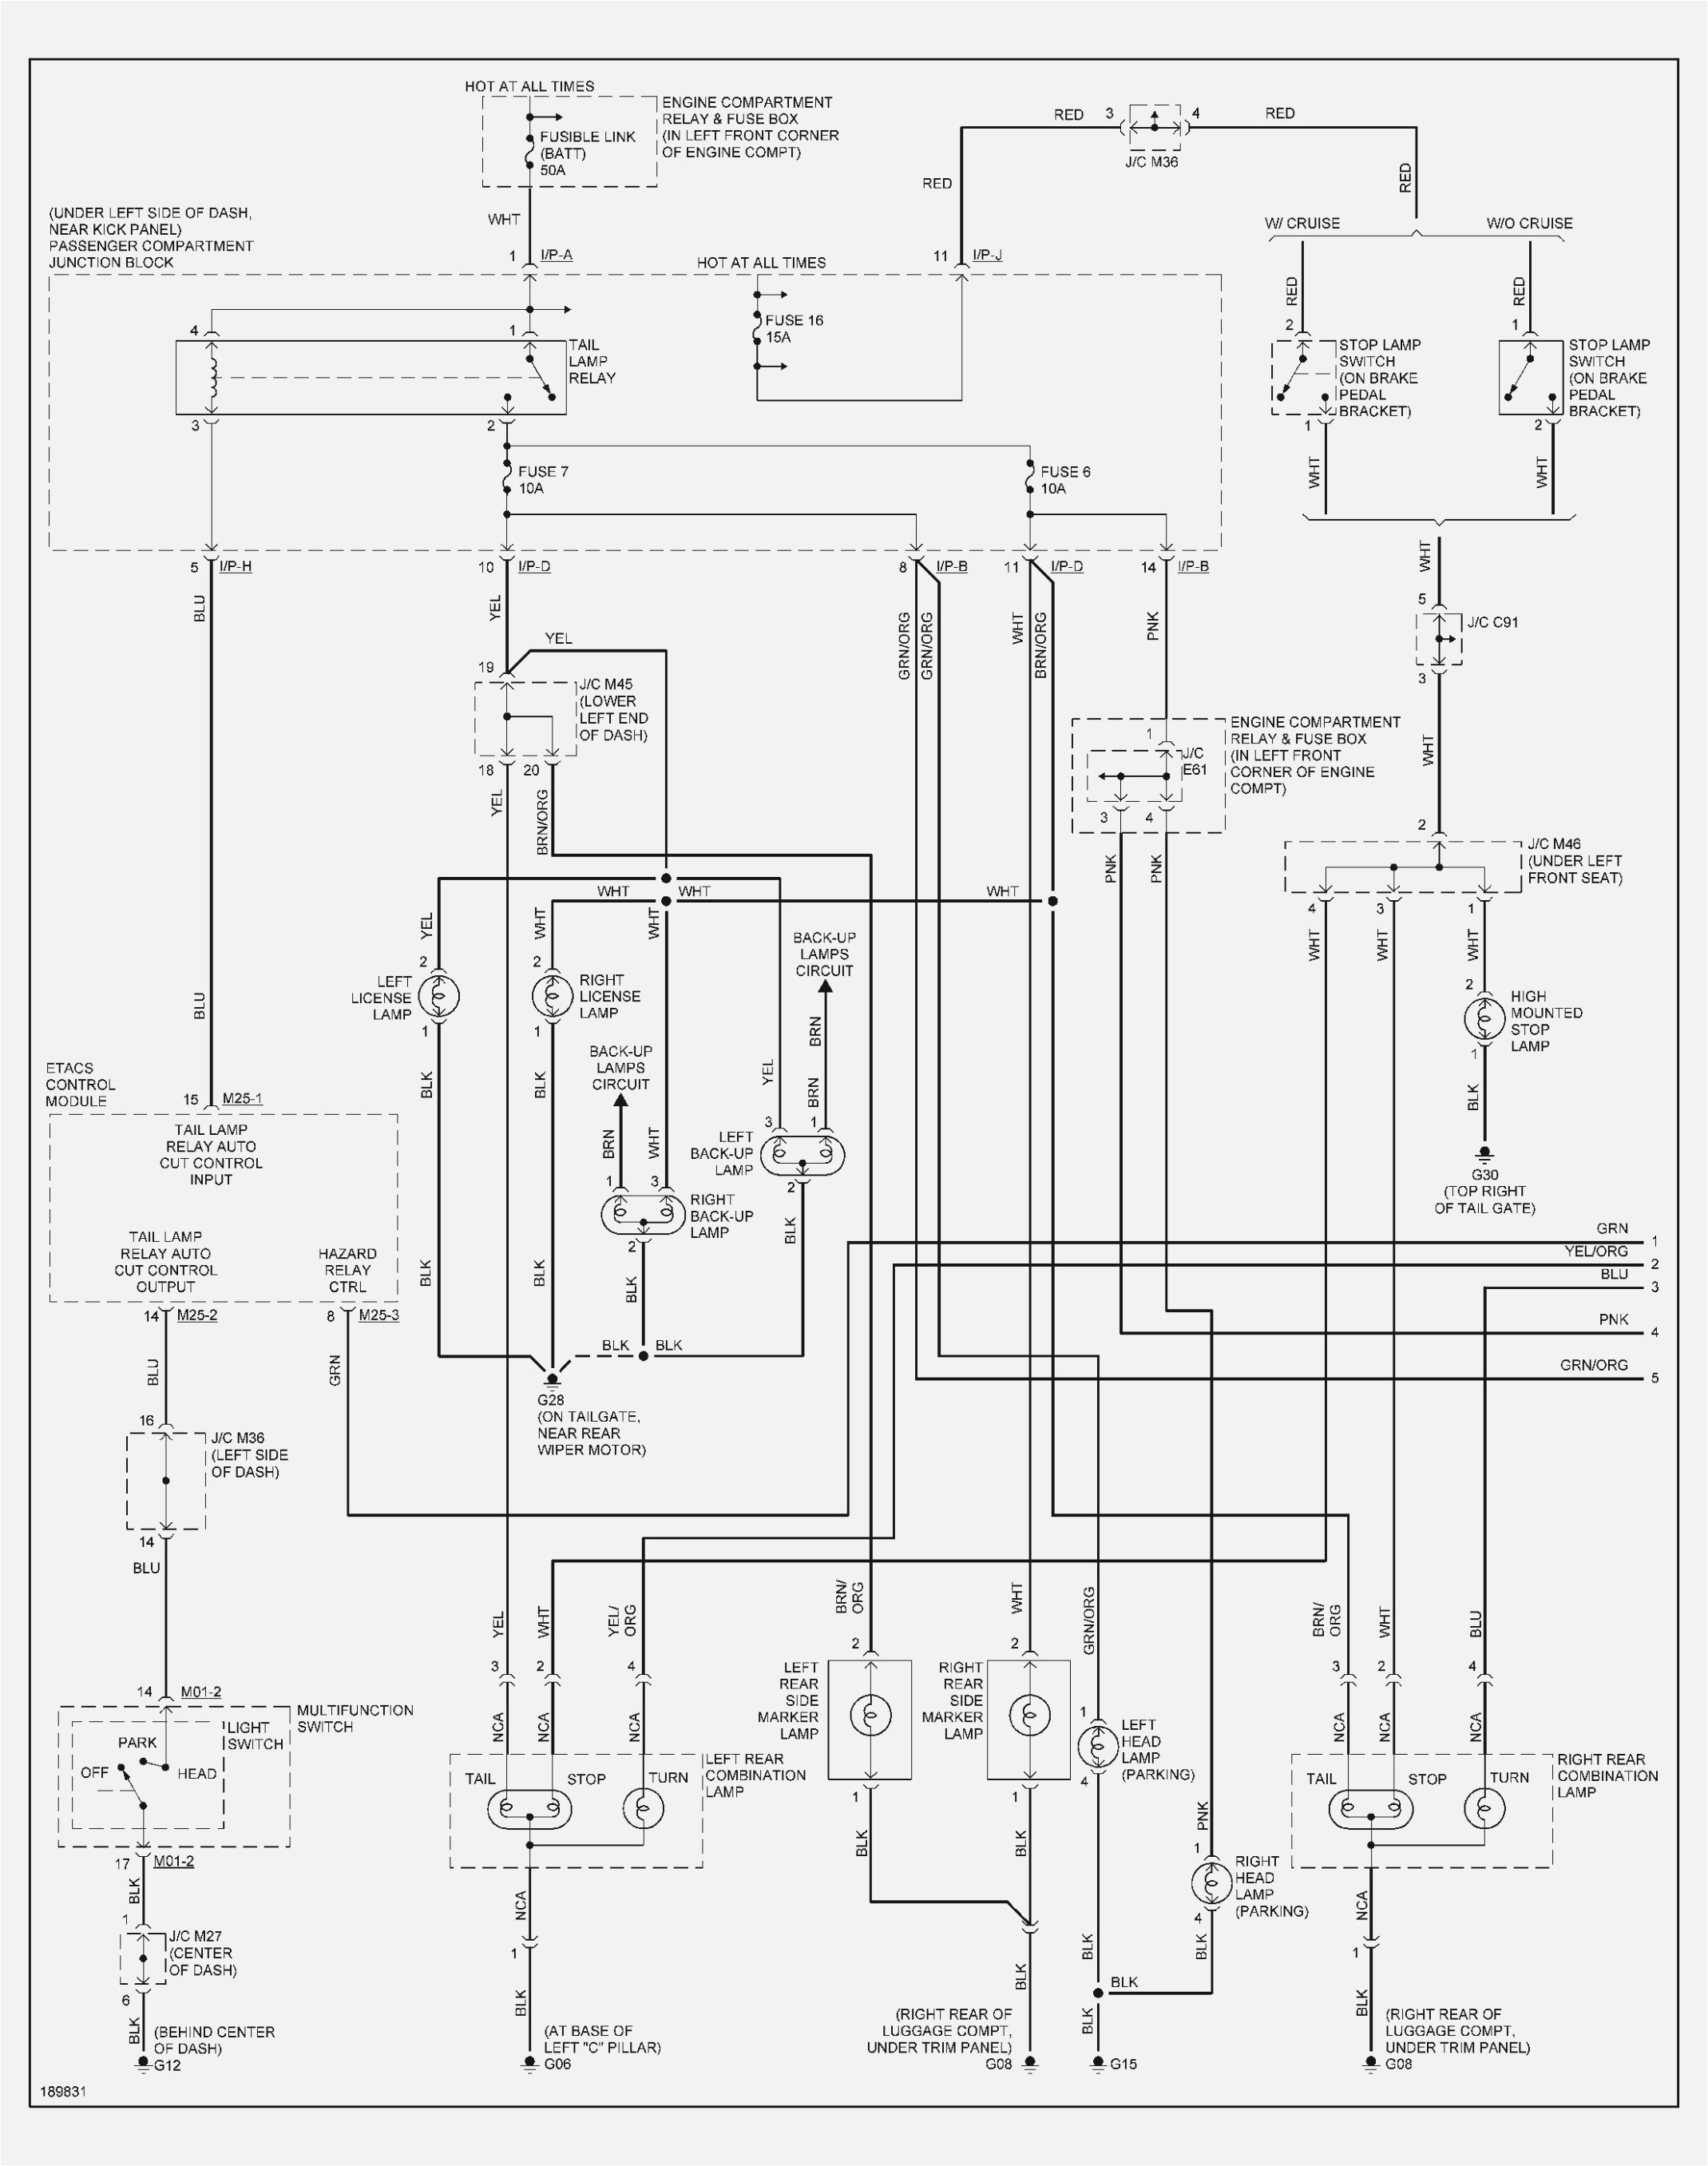 hyundai amica fuse box blog wiring diagram hyundai amica fuse box wiring diagram secrets hyundai amica